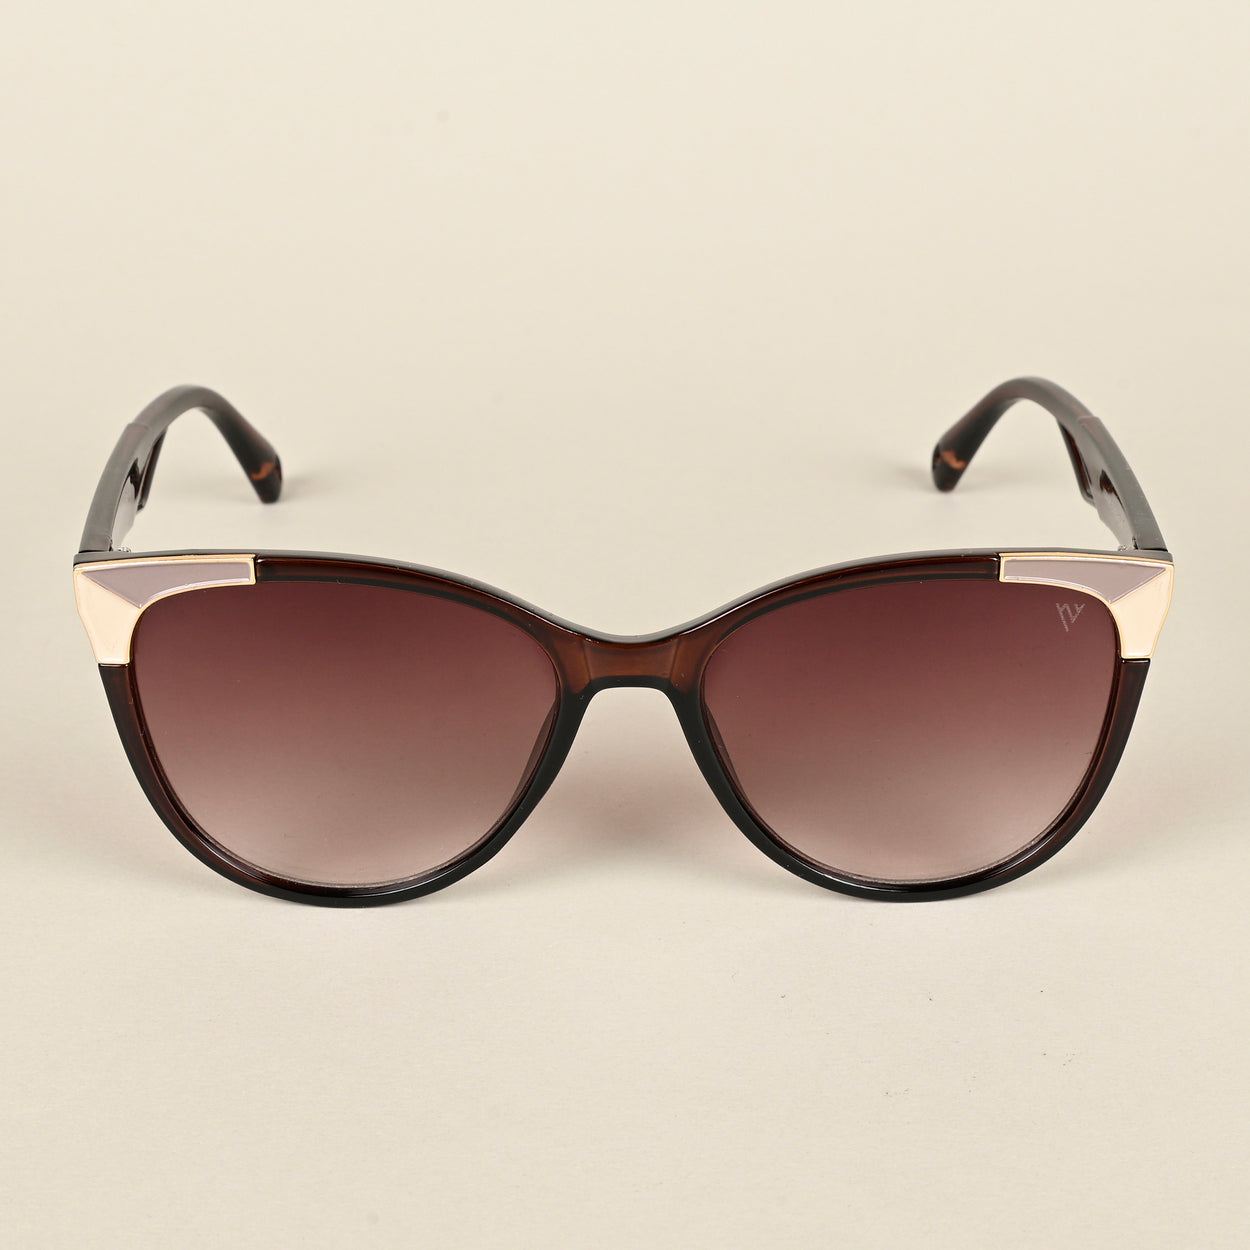 Voyage Brown Cateye Sunglasses for Women (W9056MG4229)